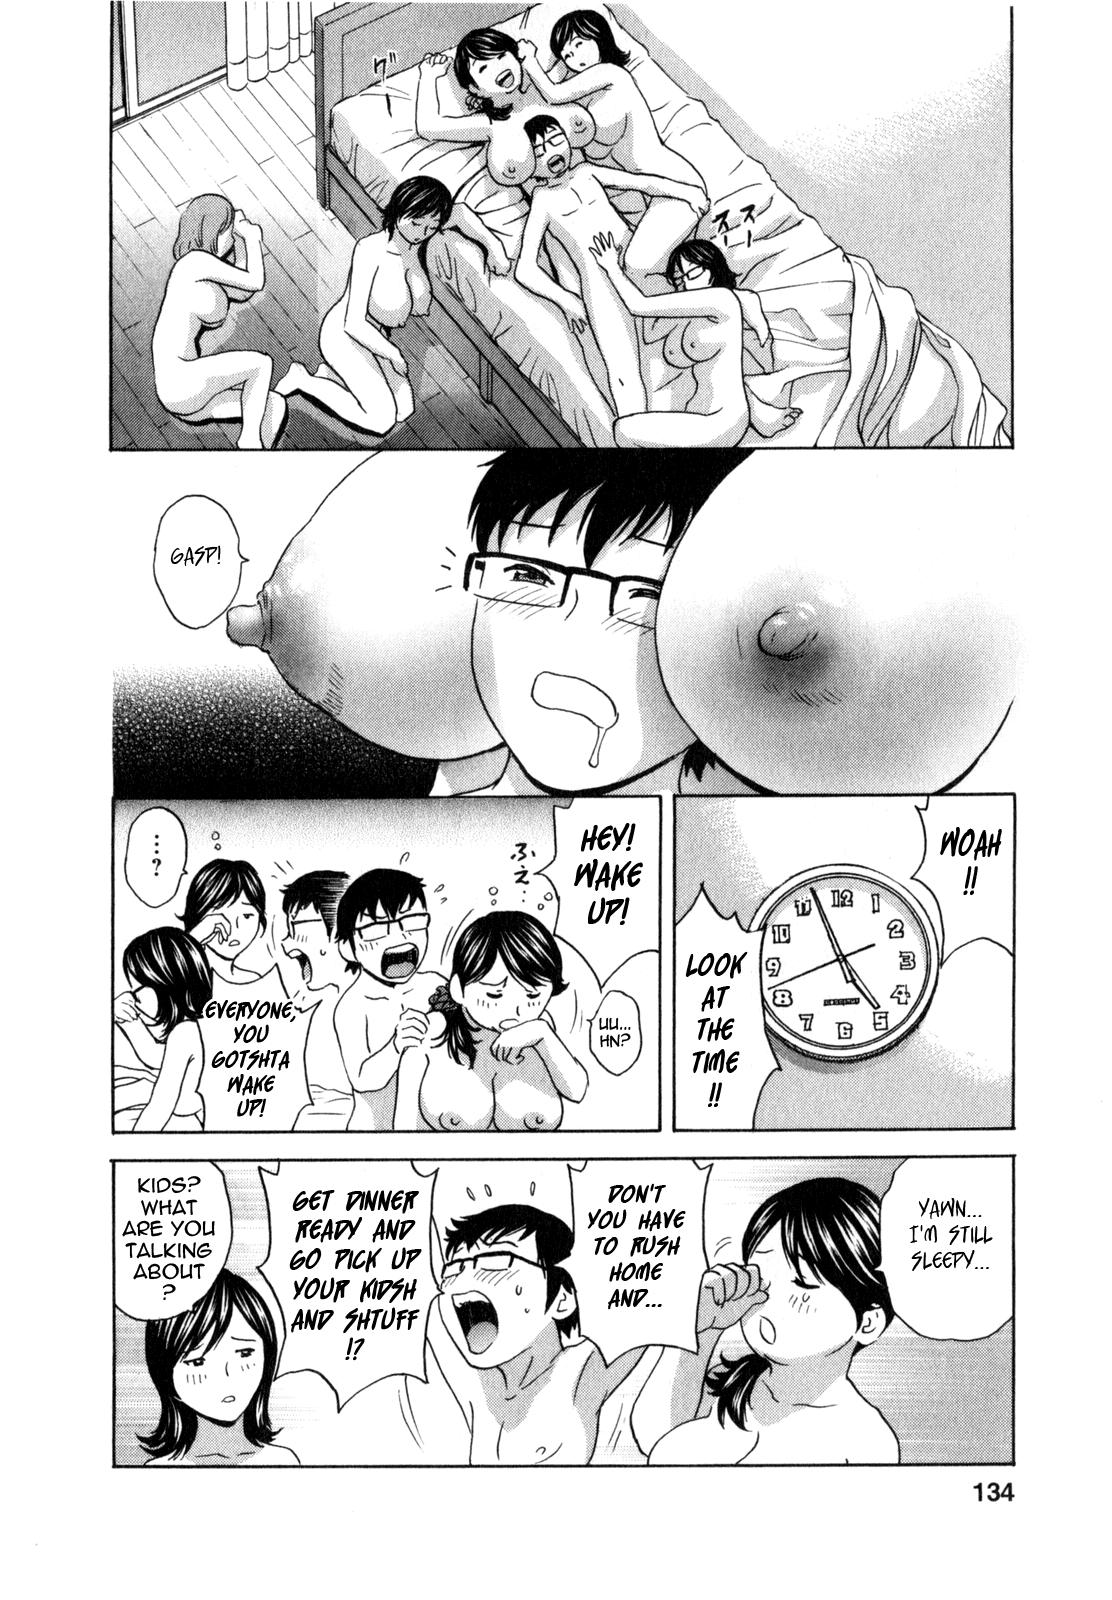 [Hidemaru] Life with Married Women Just Like a Manga 3 - Ch. 1-7 [English] {Tadanohito} 141